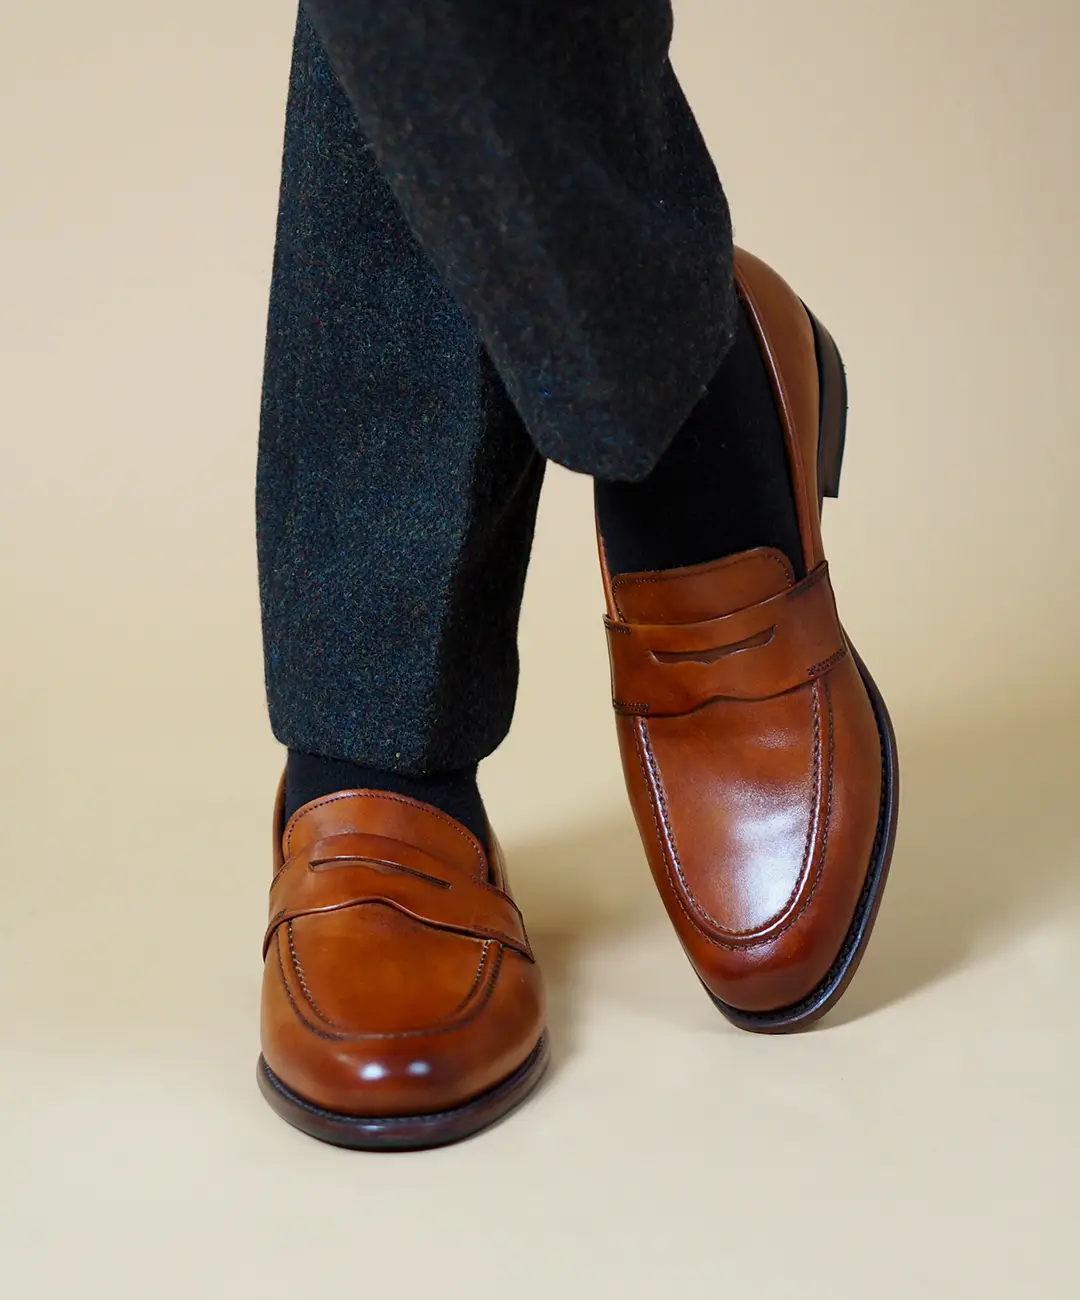 Handmade English Men's Shoes & Boots | Shoemakers